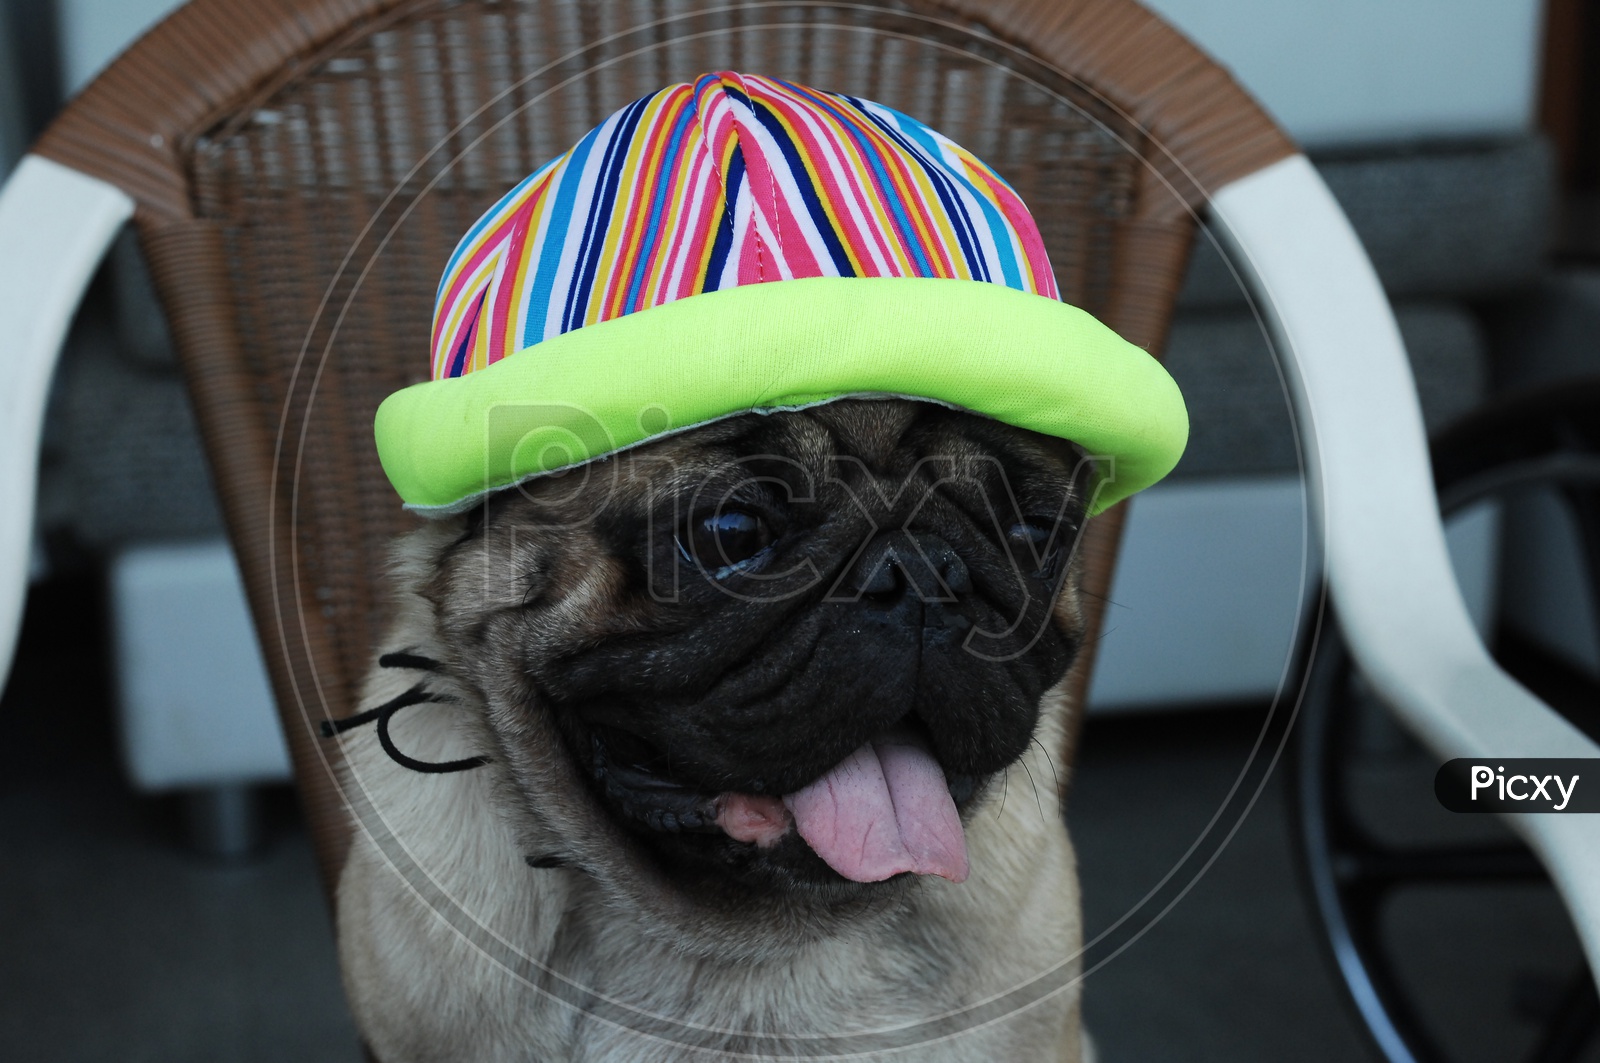 A Pug dog wearing a hat